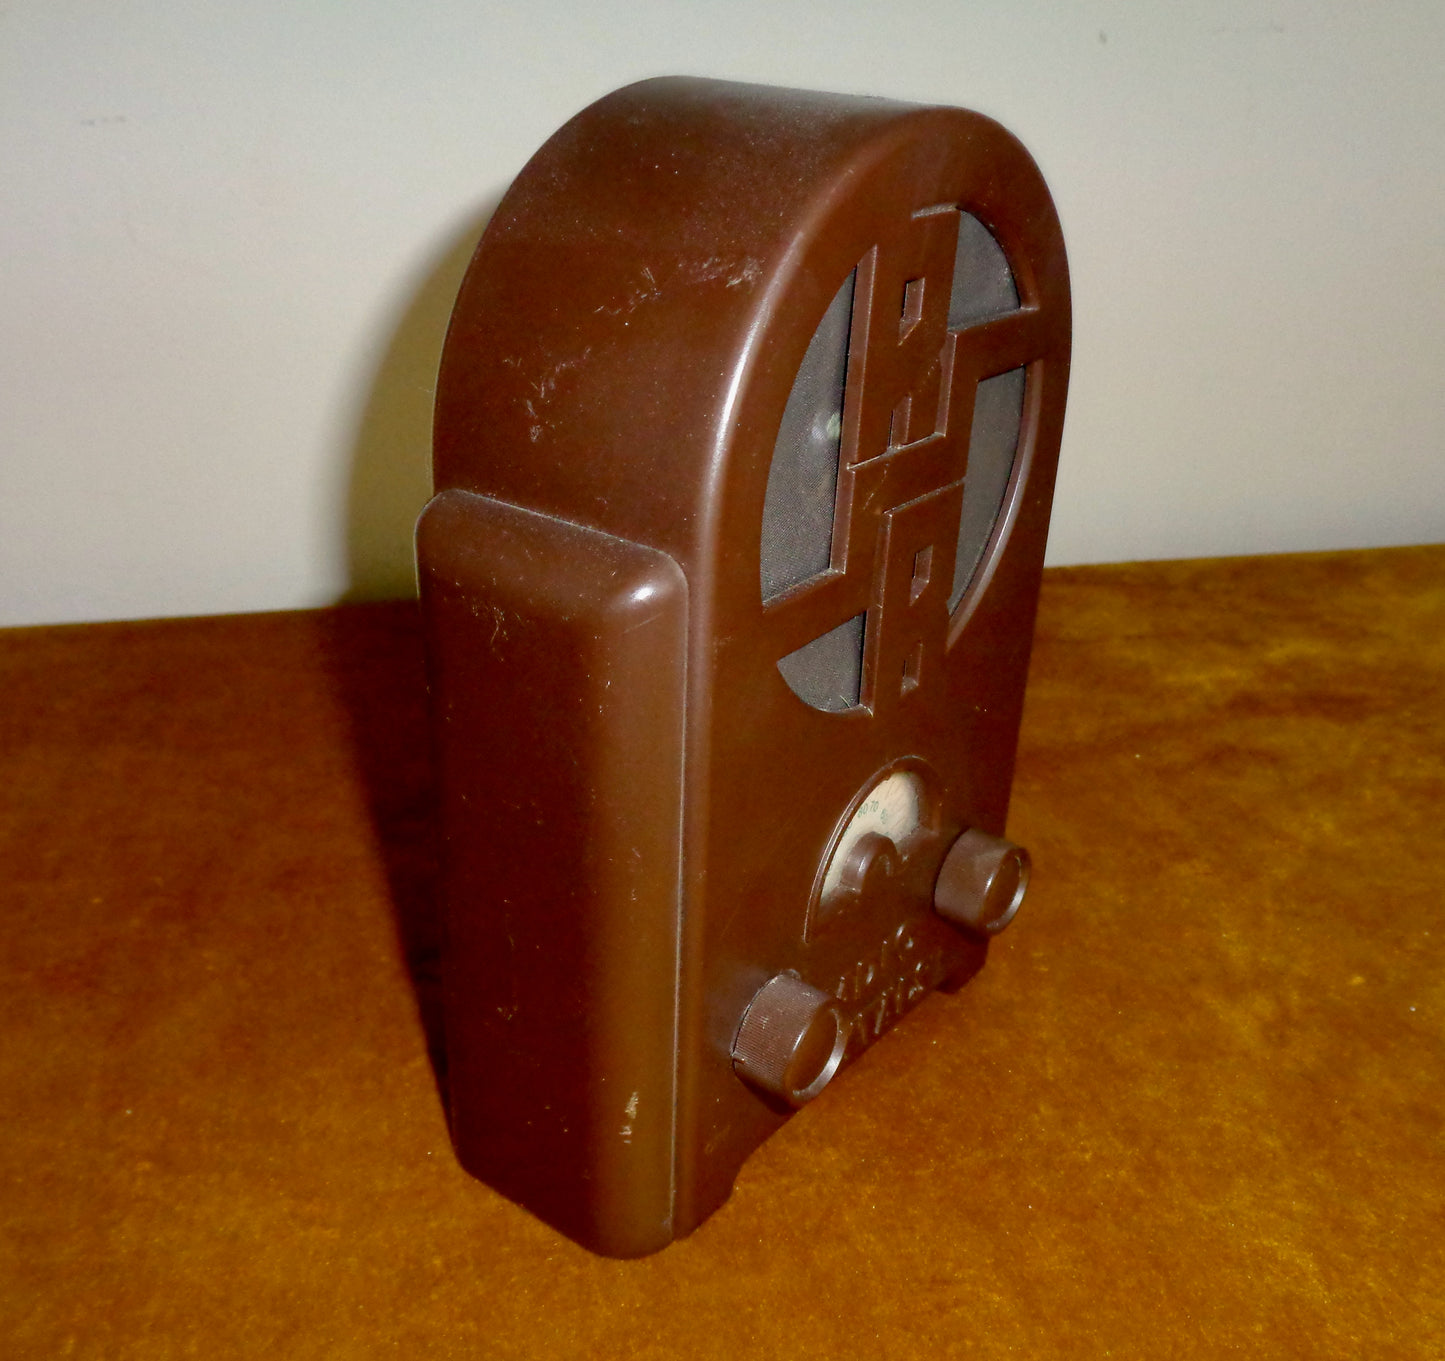 Vintage 1970s Radio Rentals Battery Transistor Radio Novelty Cathedral Style